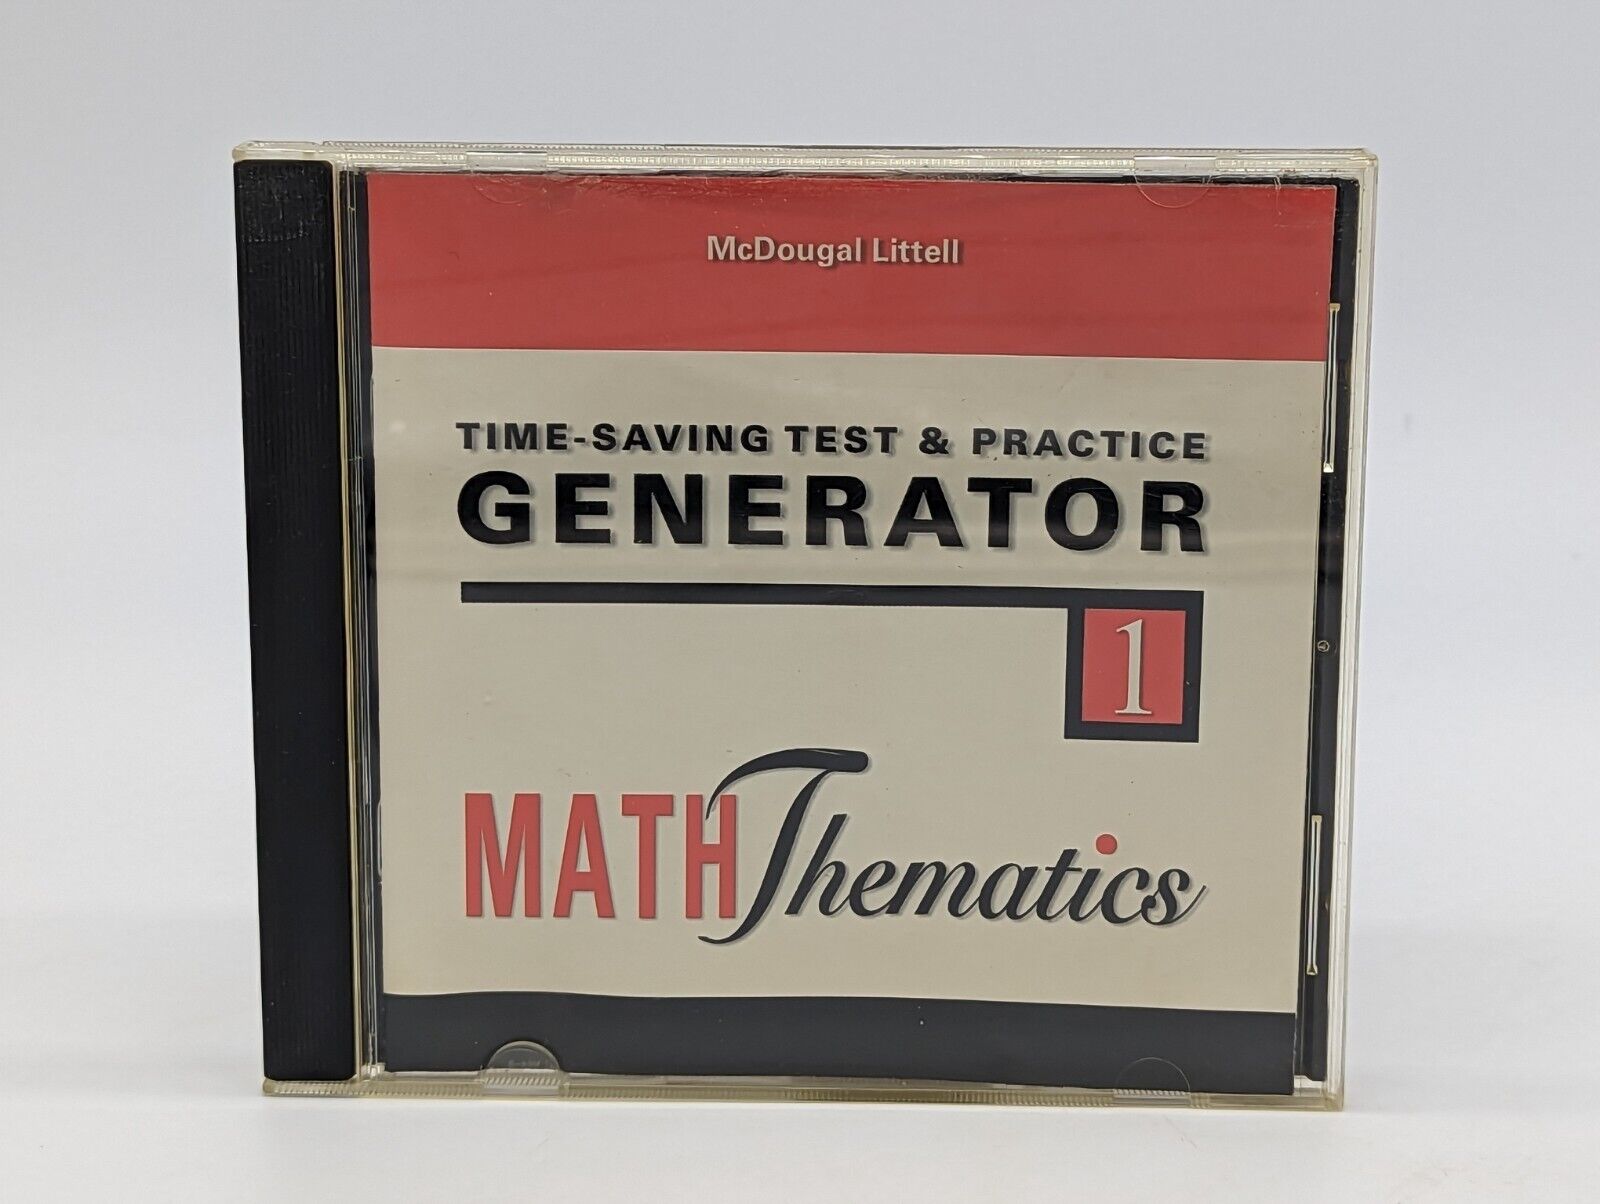 McGougal Littell Time-Saving Test & Practice Generator 1 Math Thematics CD-ROM